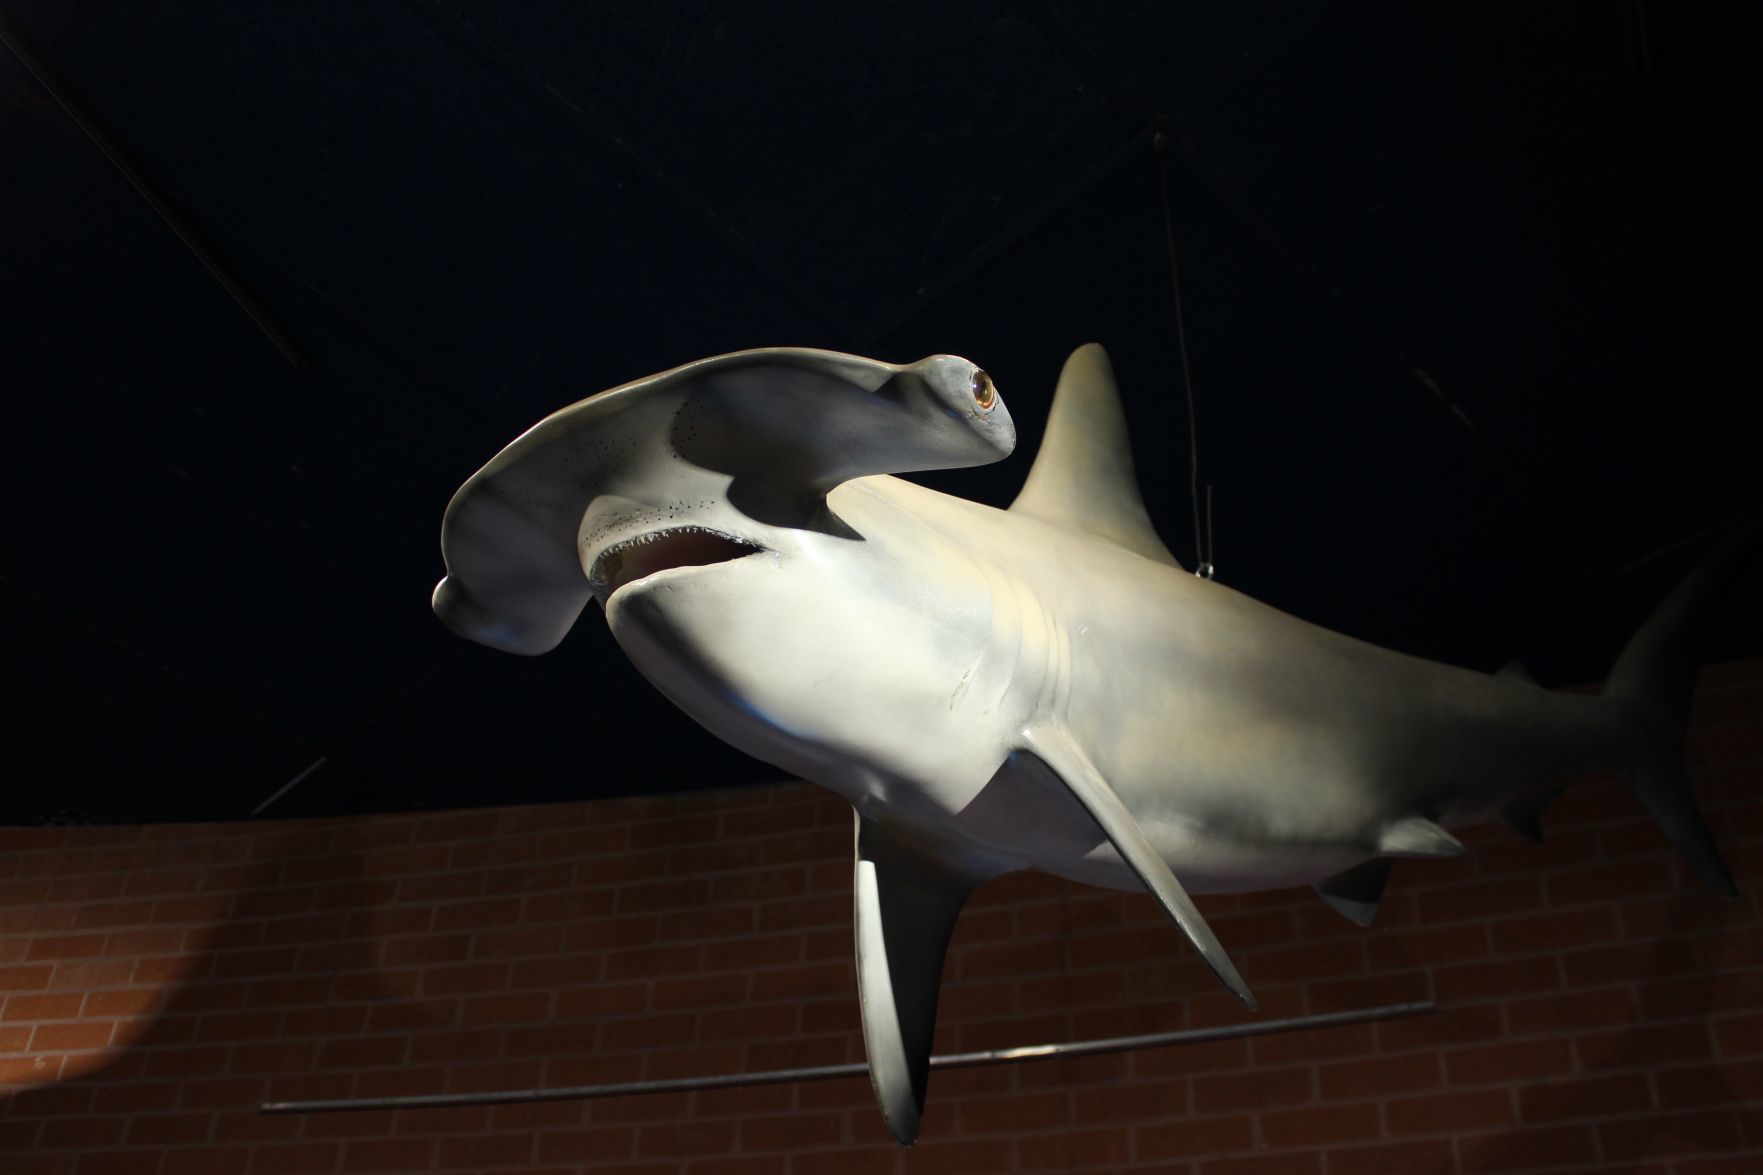 w/Scars On Body Realistic Hammerhead Shark 7" PVC Figure Beautifully Detailed 